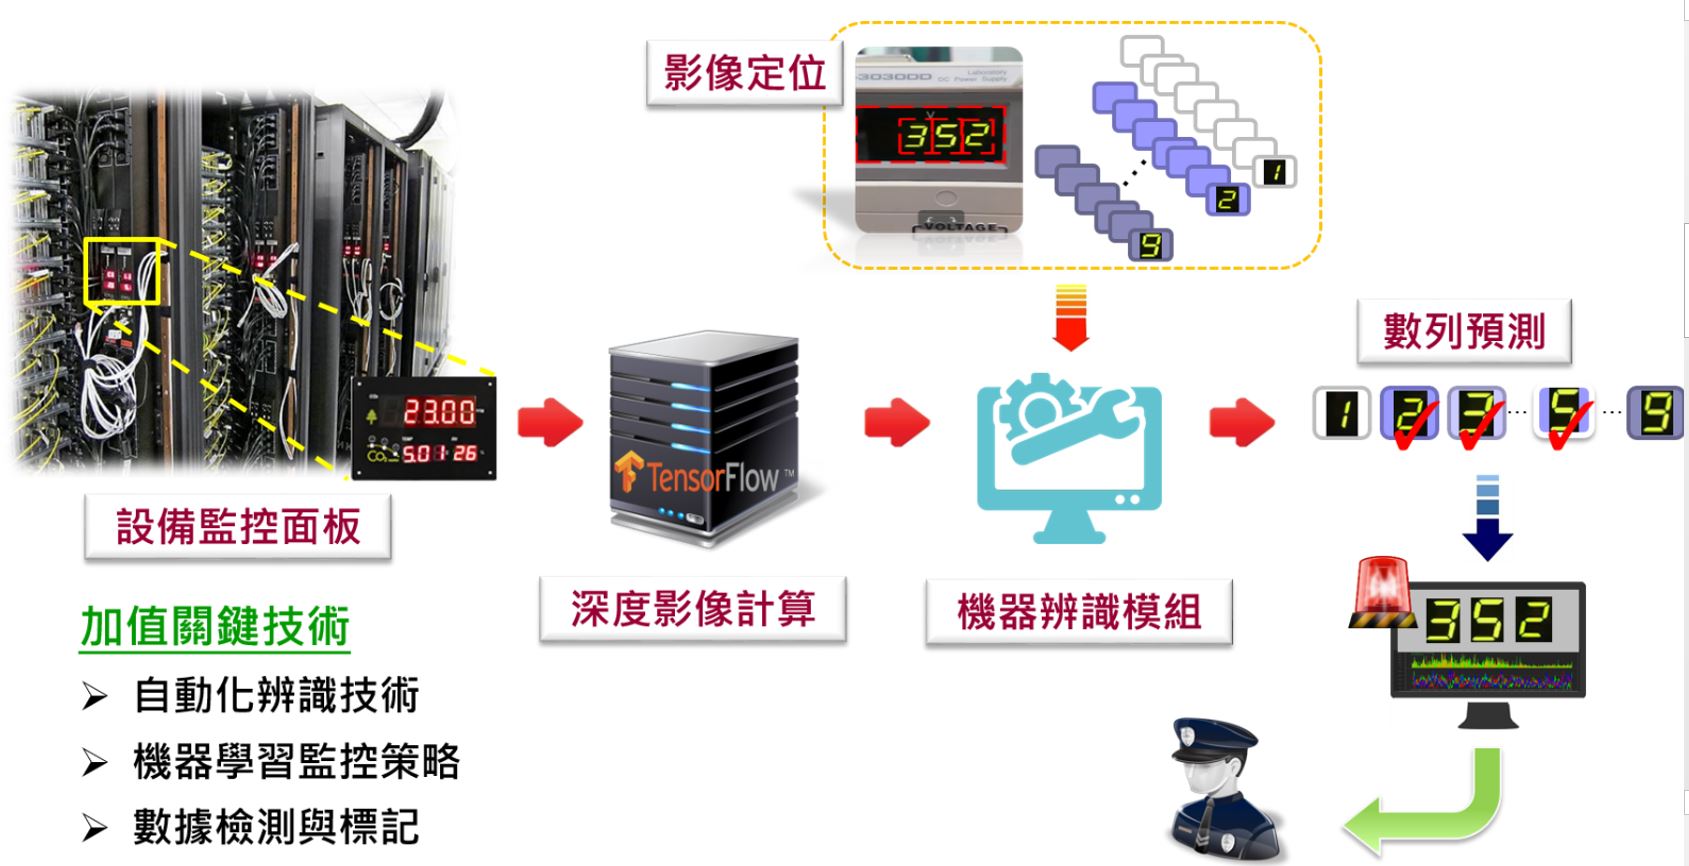 Image analysis technology for information digitization of machine dashbord